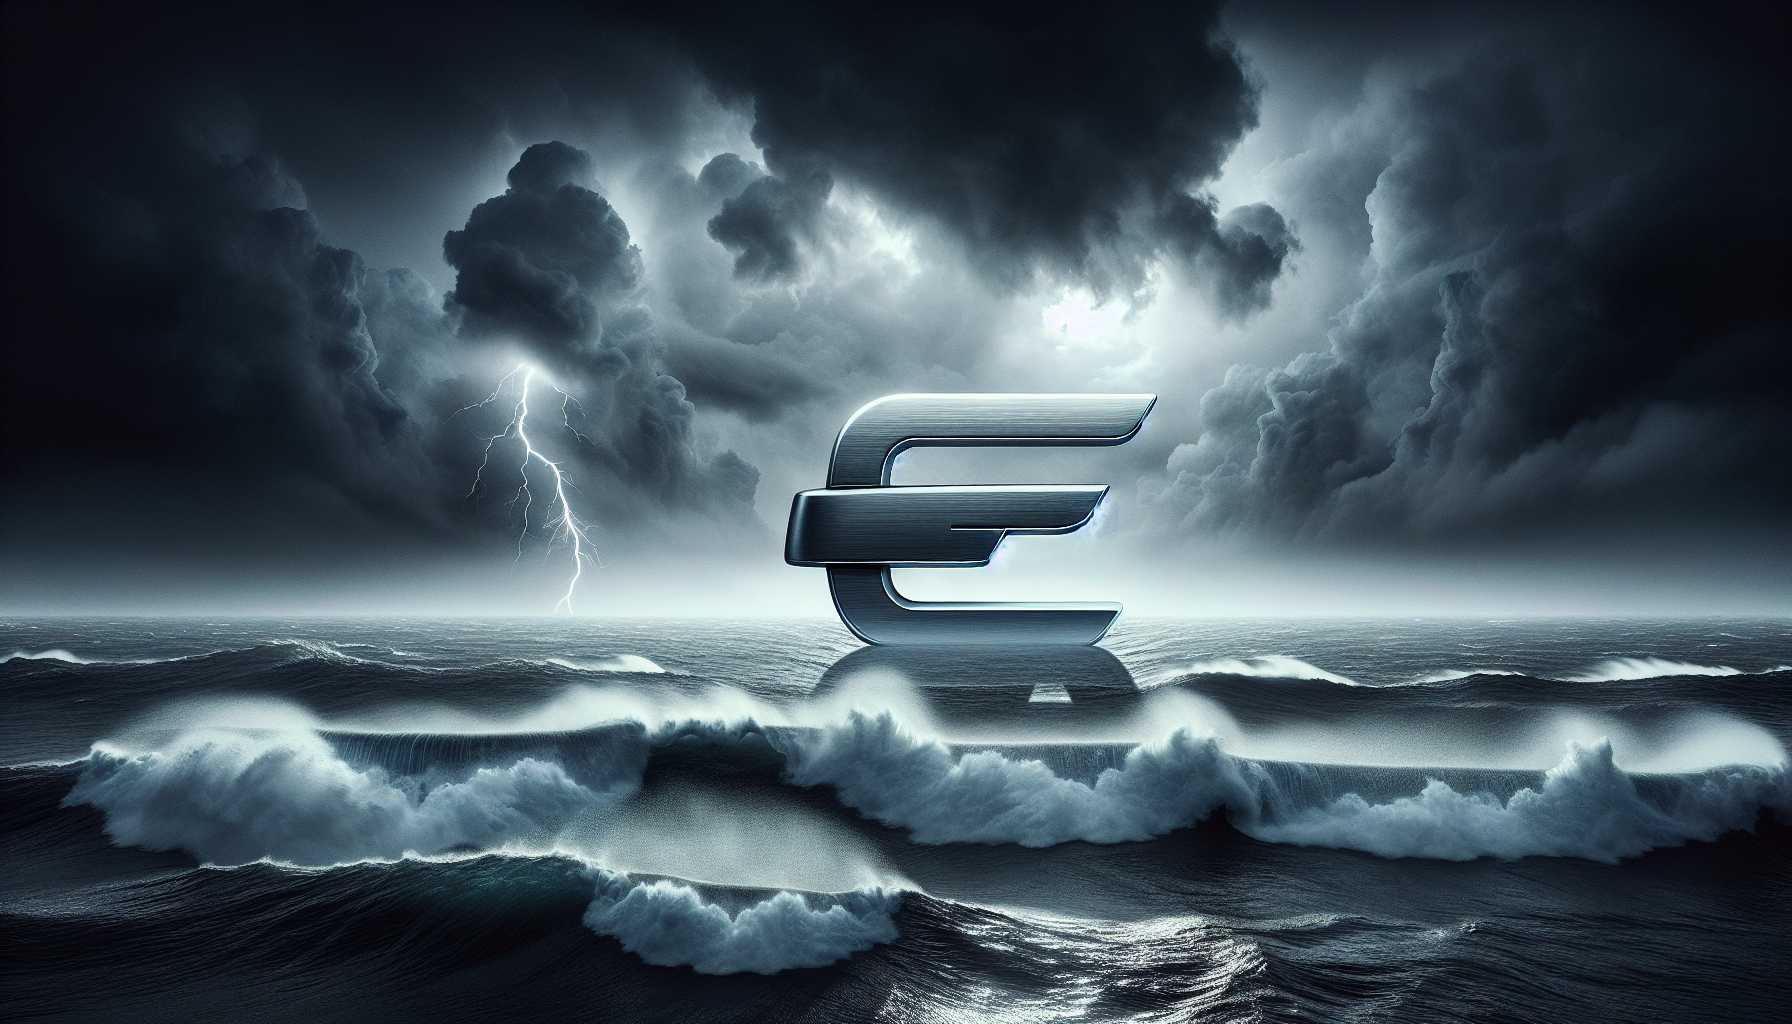 Tesla logo superimposed on a dark stormy ocean background